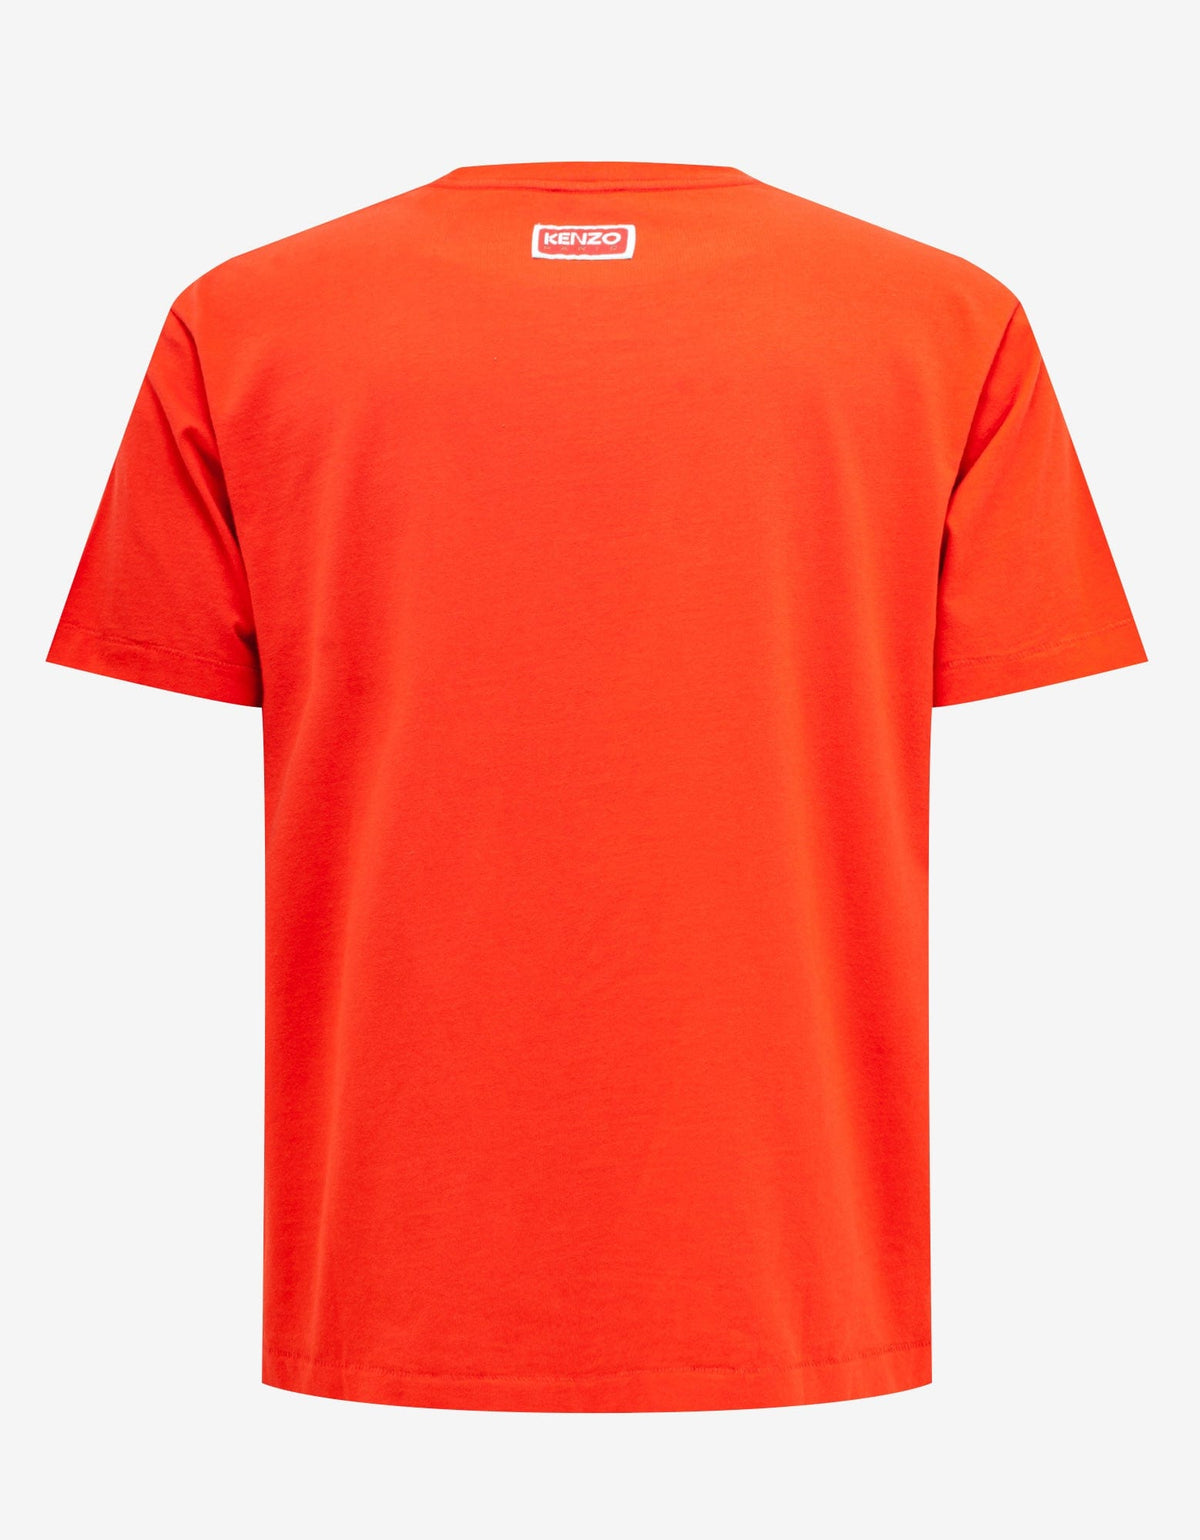 Kenzo Red 'Varsity Jungle' Tiger Oversize T-Shirt